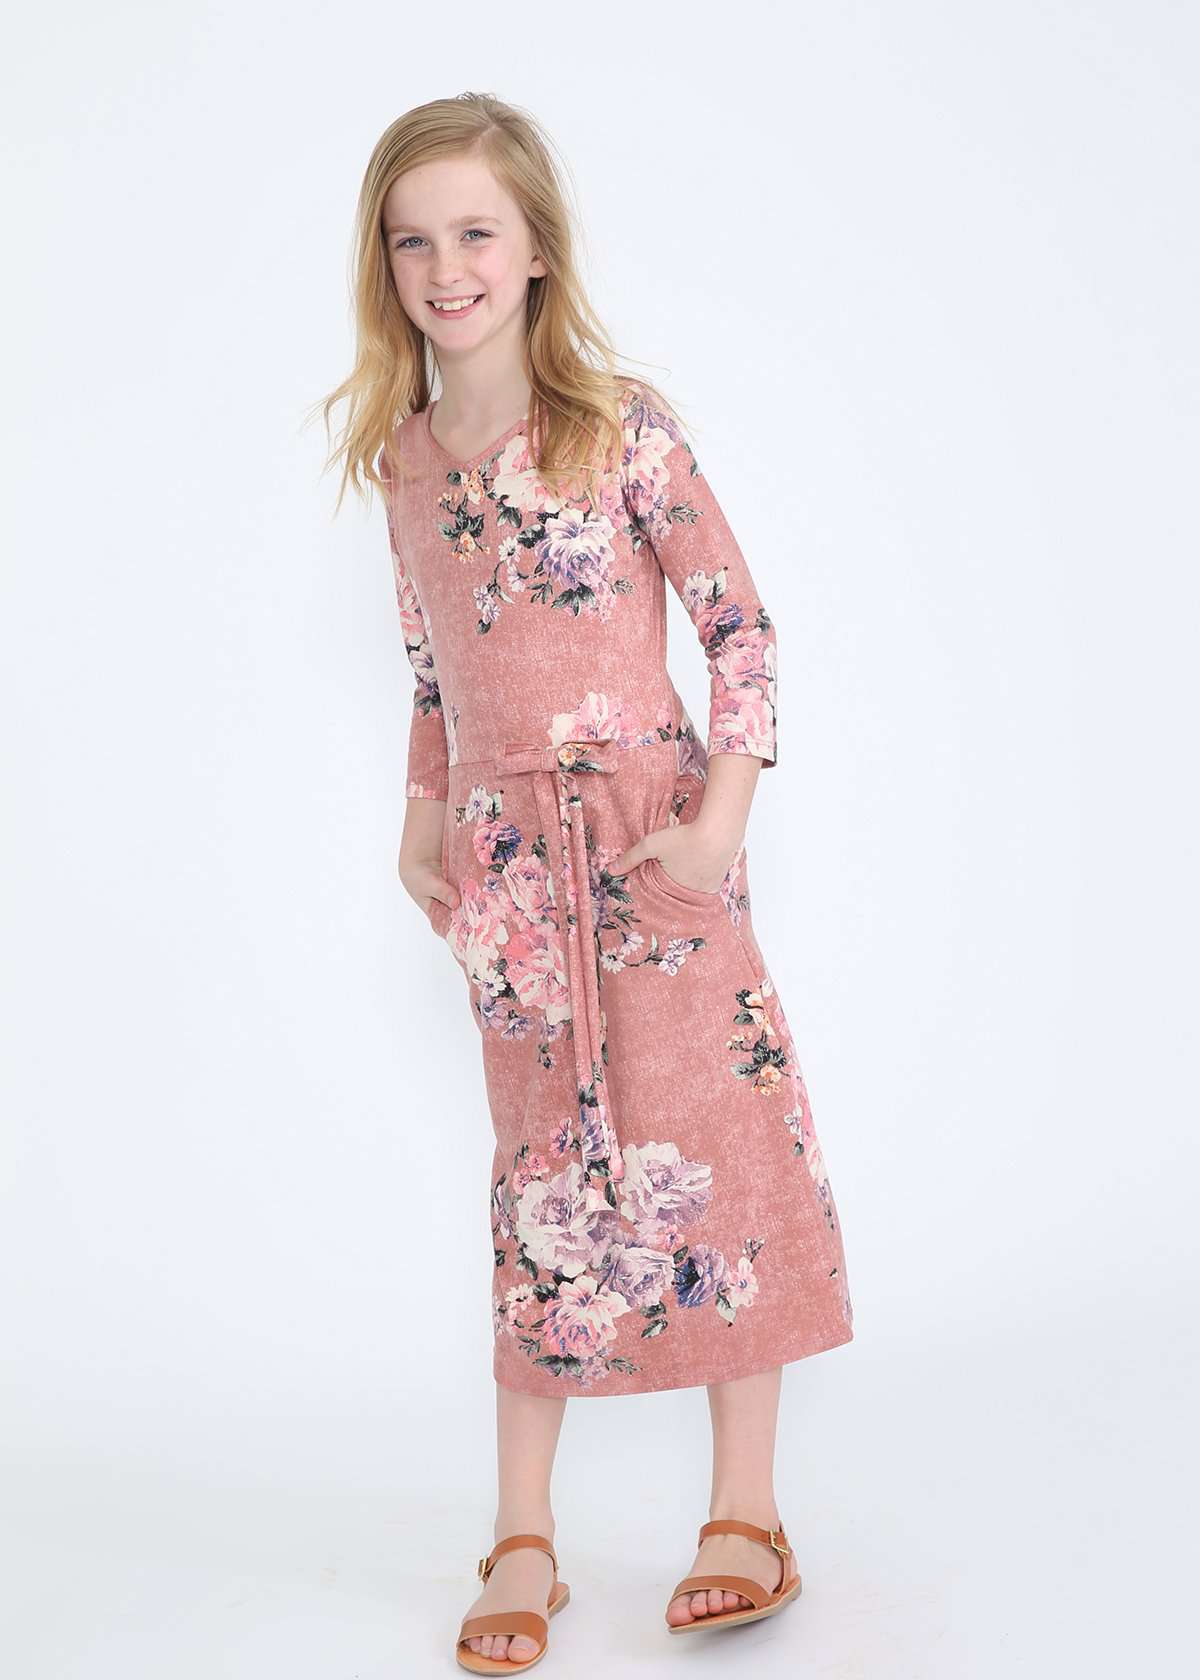 Blush colored modest girls floral midi dress